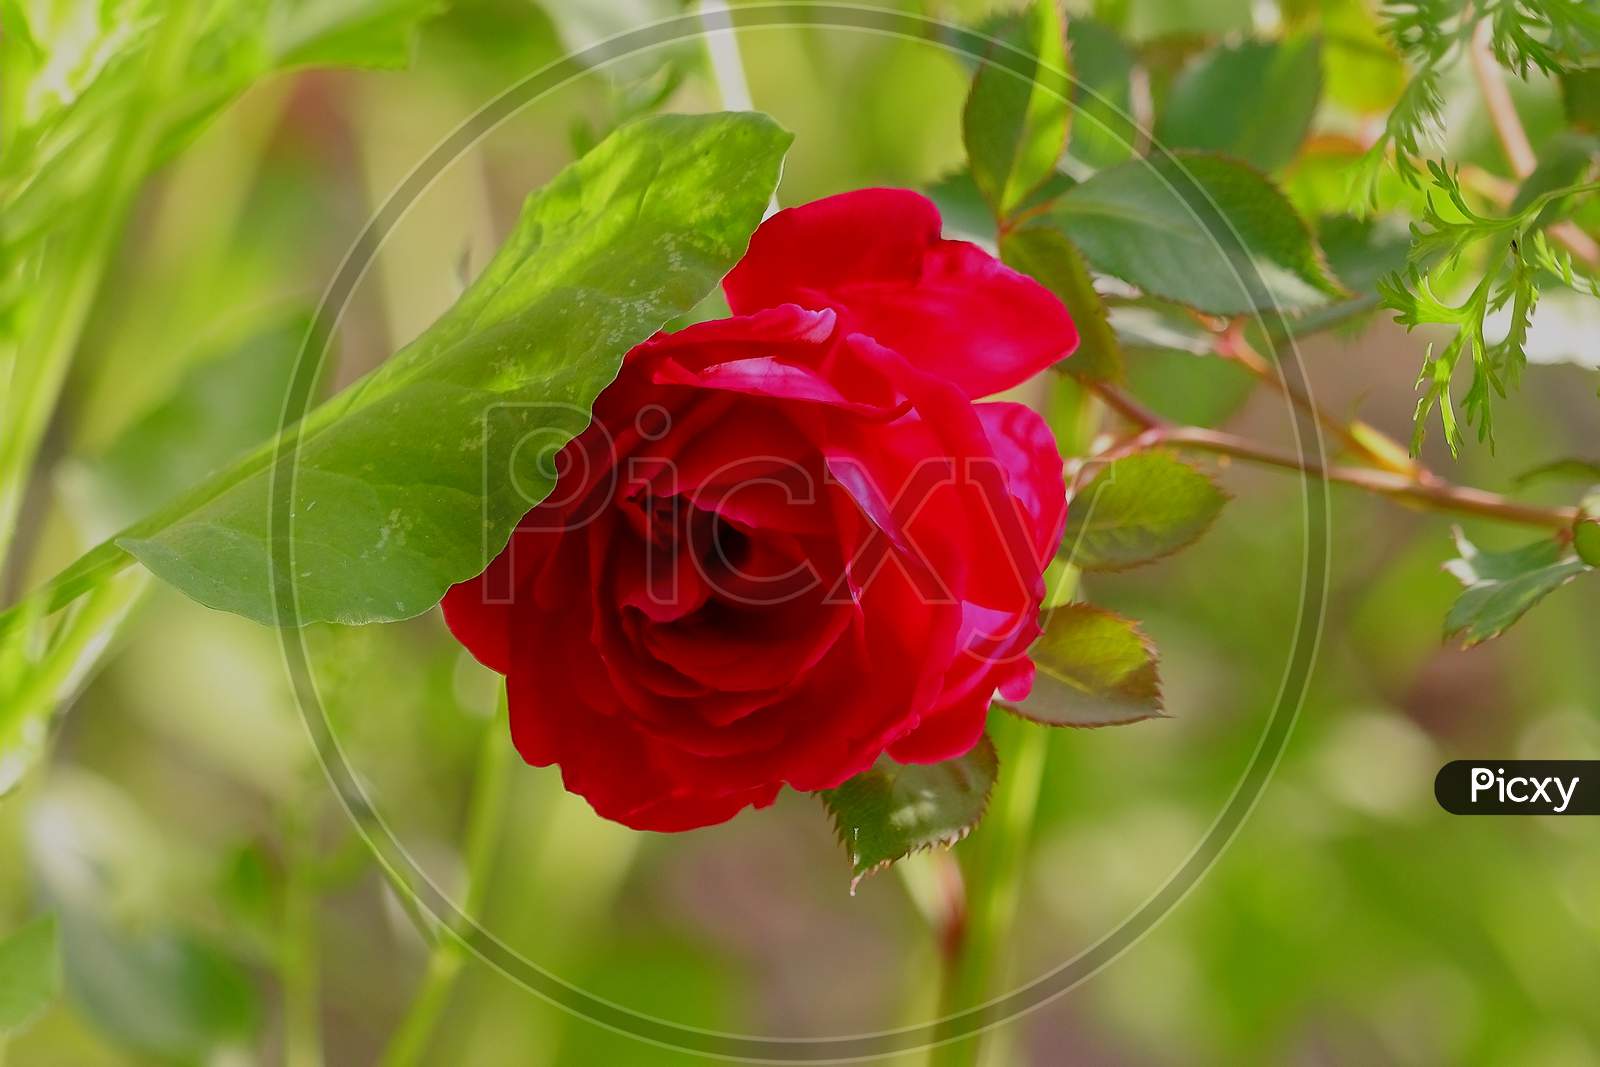 red rose flower in garden